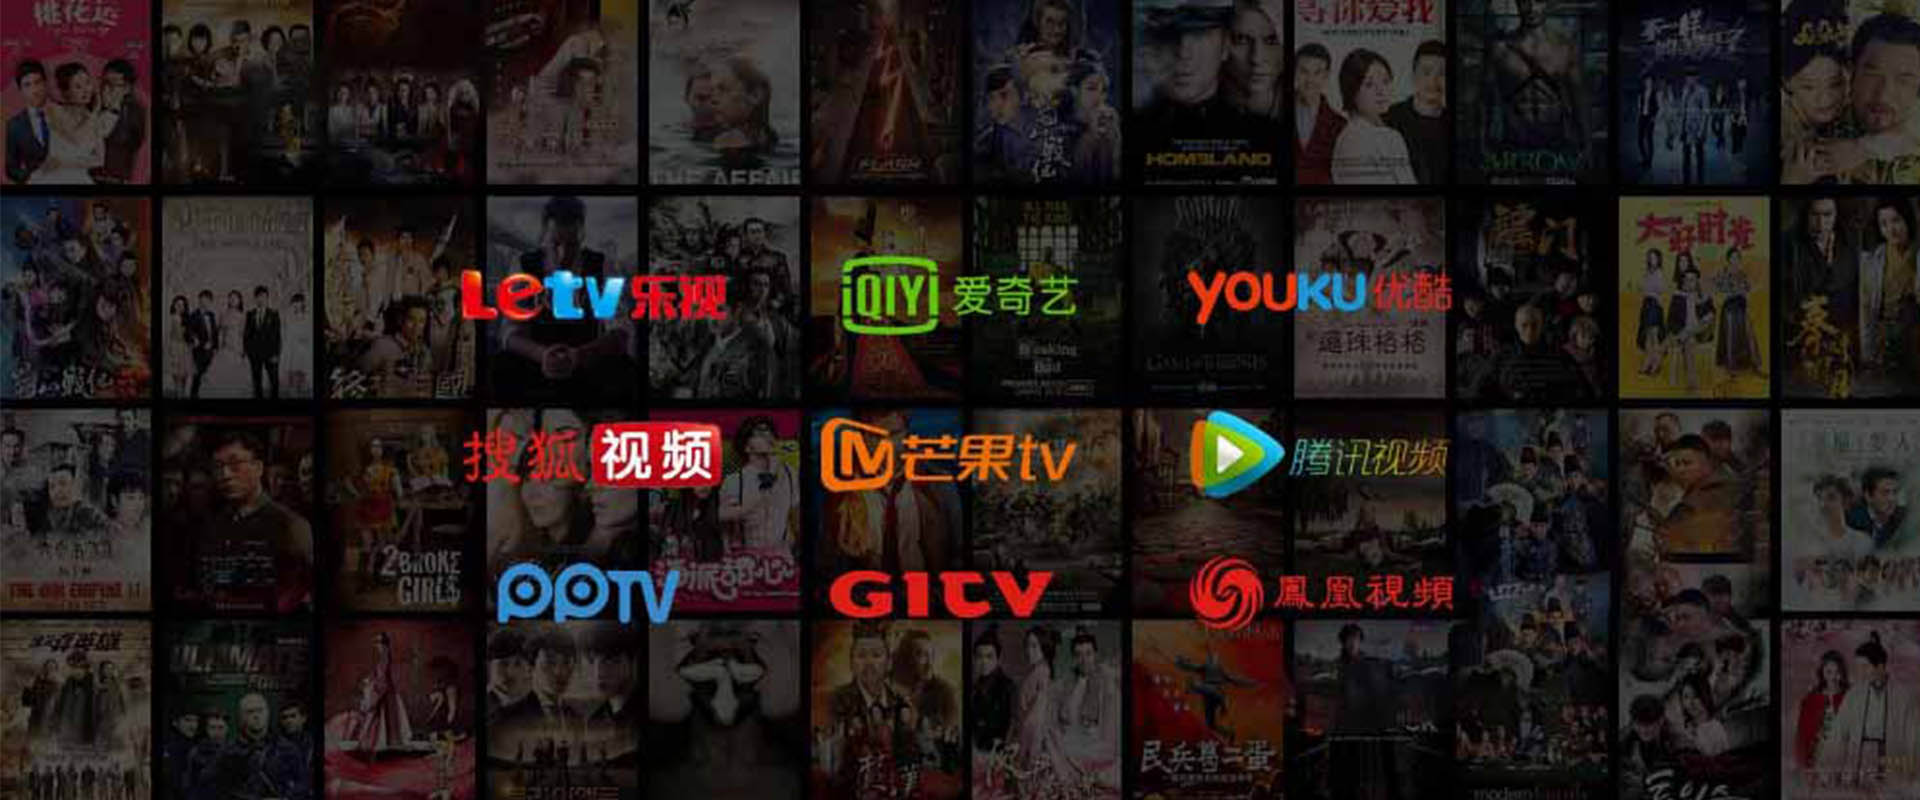 Ubox Pro-kanalenlijst Duizenden kanalen en talloze tv-programma's